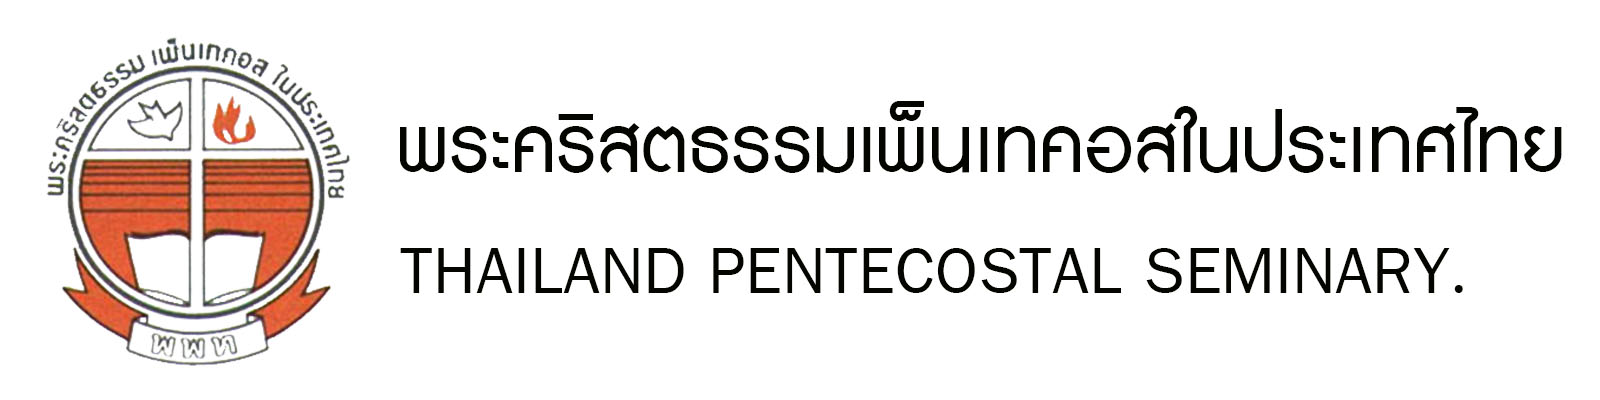 THAILAND PENTECOSTAL SEMINARY Logo